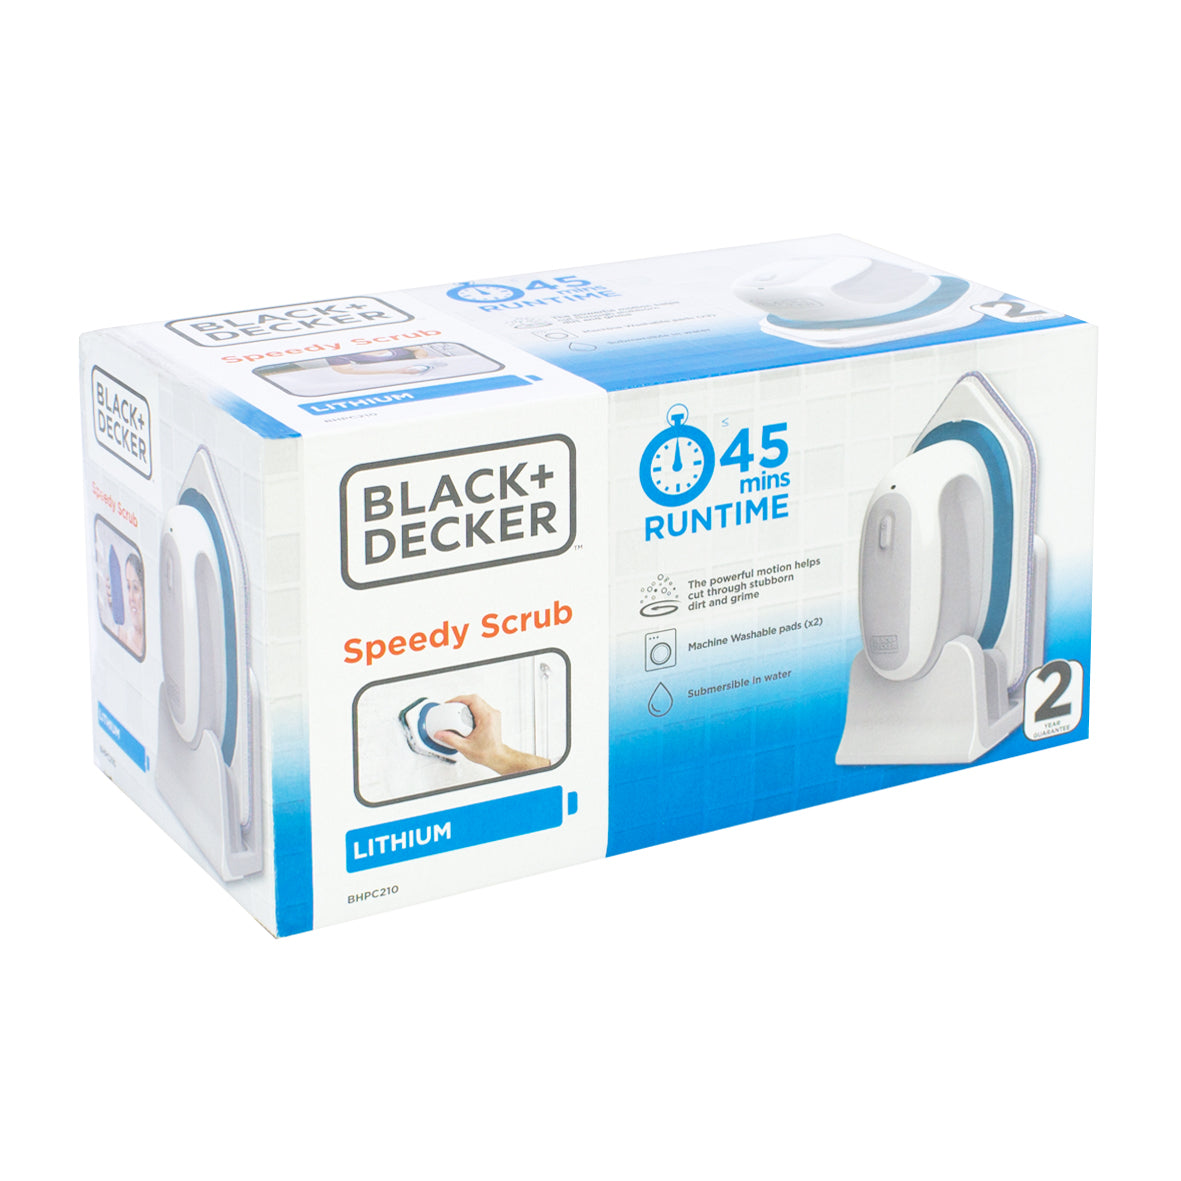 Black+Decker BHPC210 Speedy Scrub Rechargable White Bathroom Cleaner